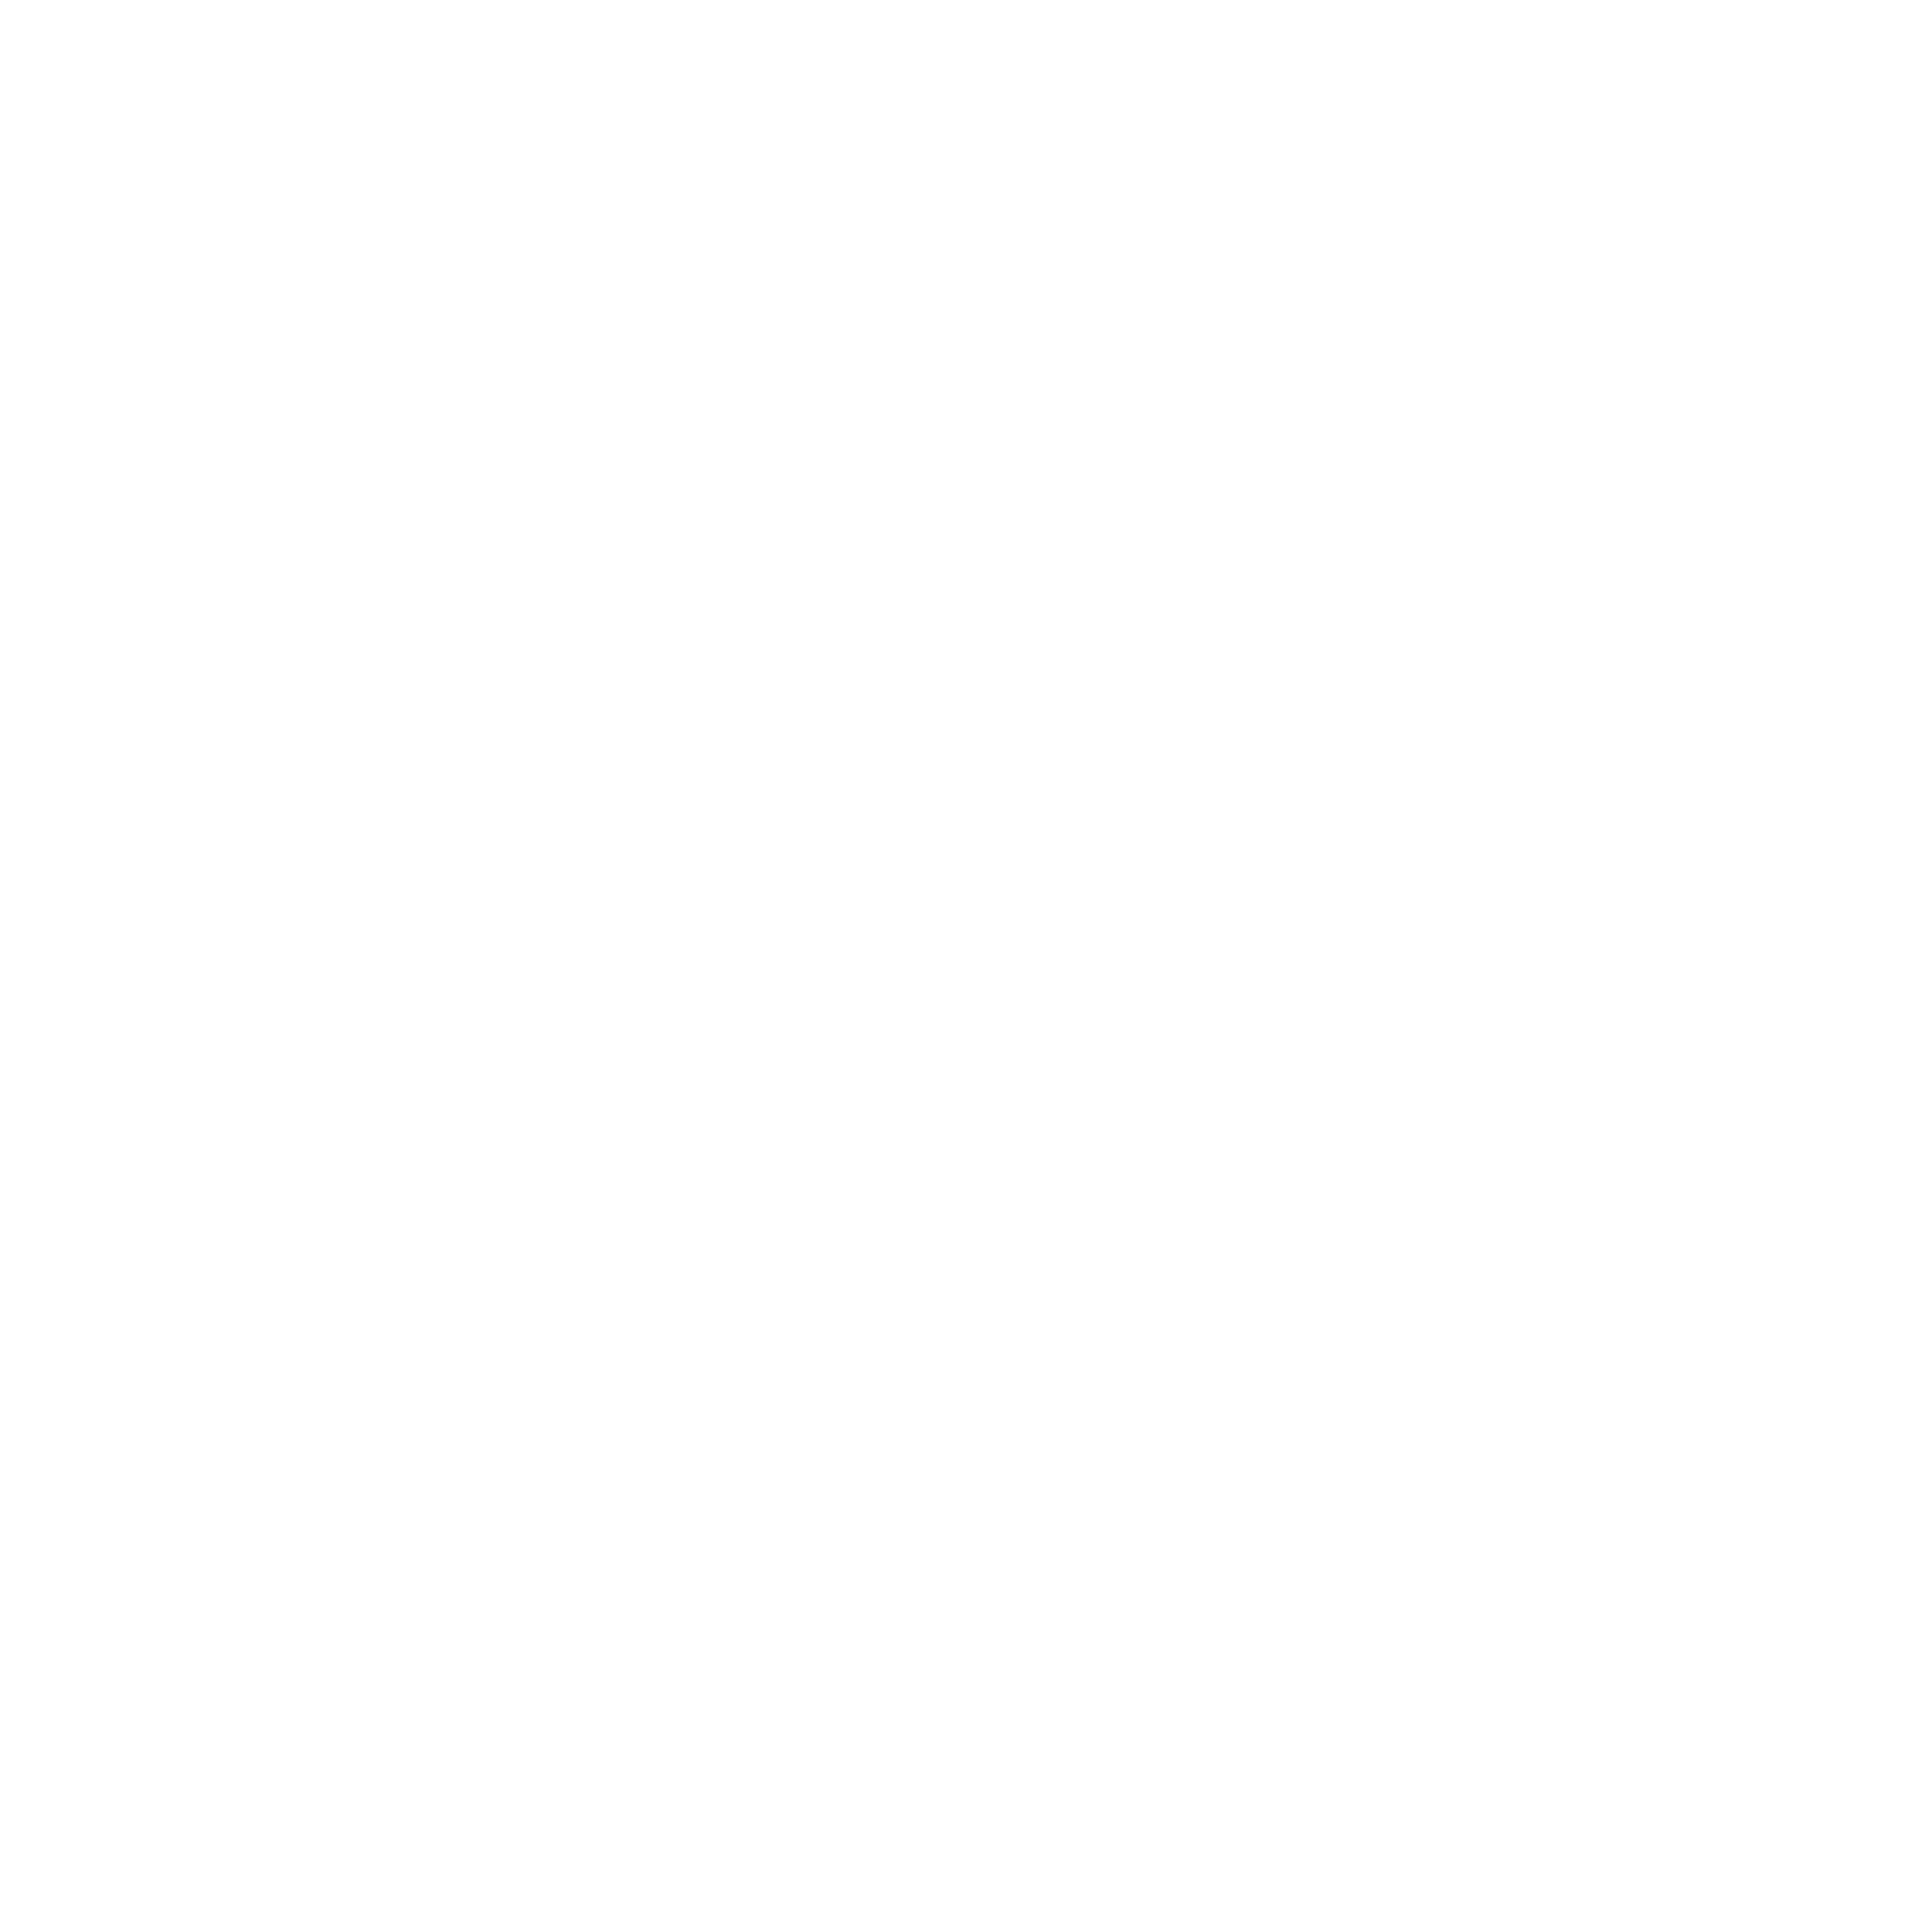 Macsur_Blanco